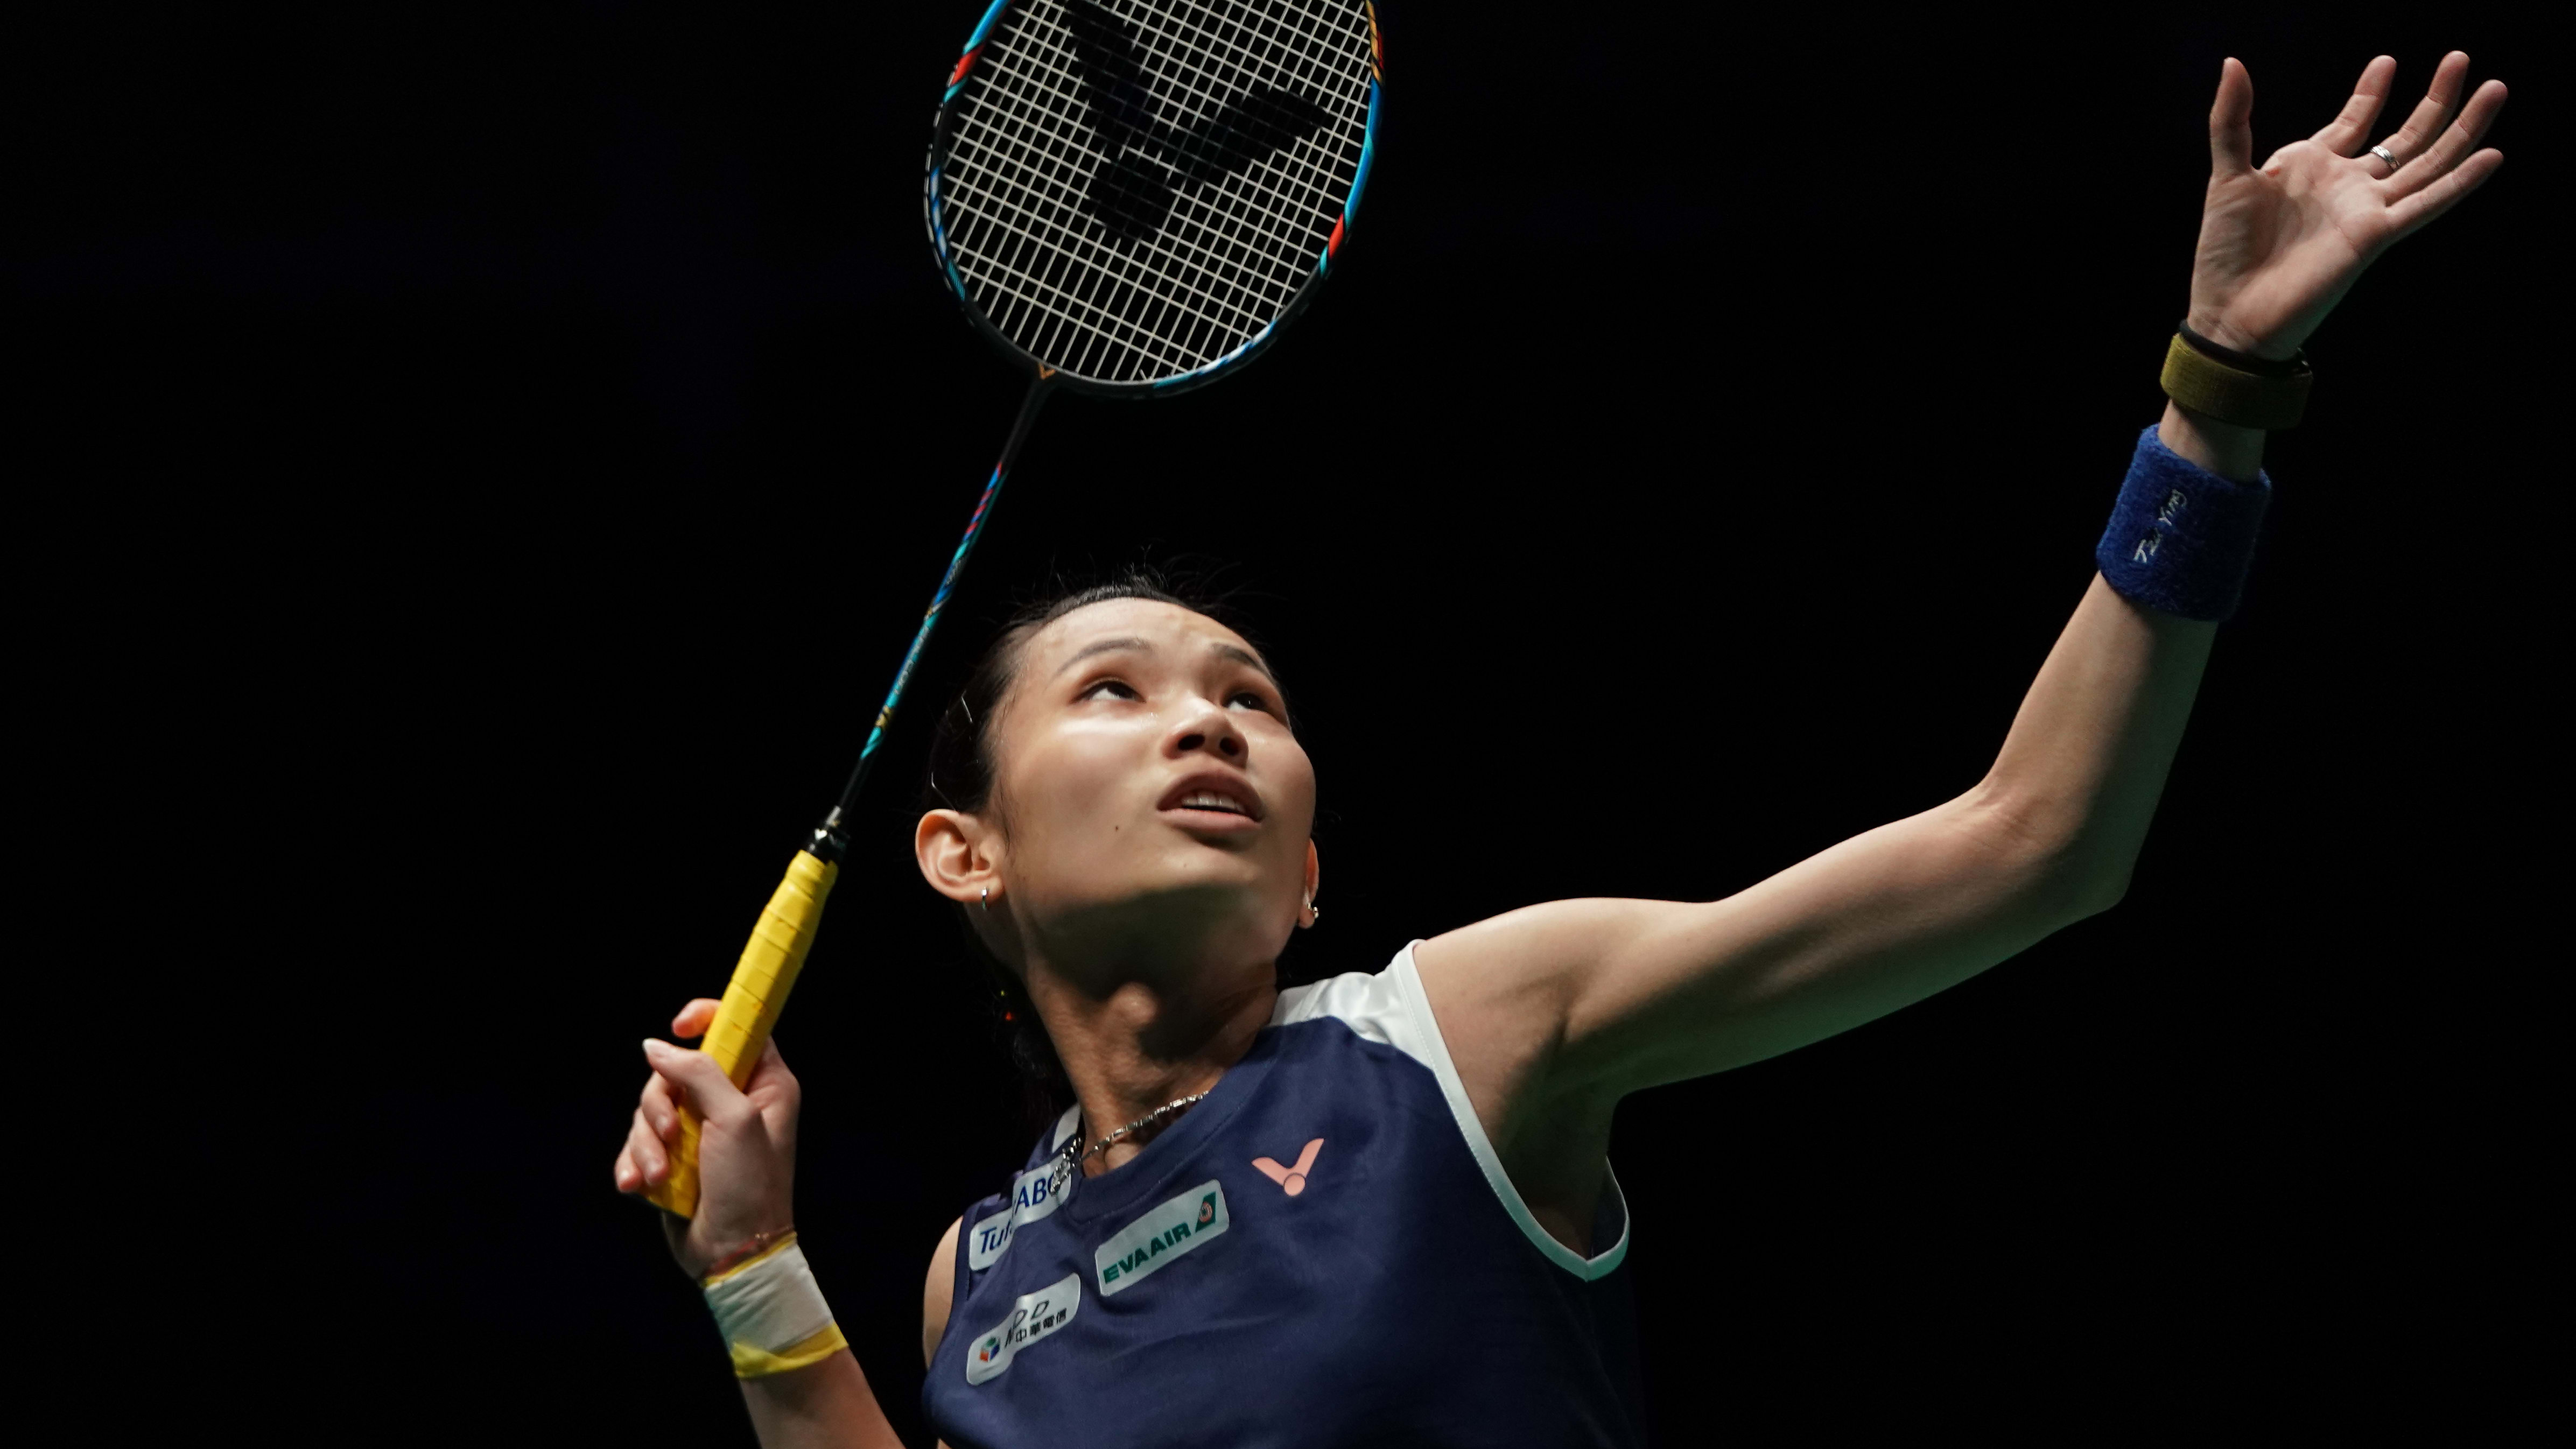 Badminton 2022 Indonesia Open 2022 - Semi-finals on Saturday 18 June